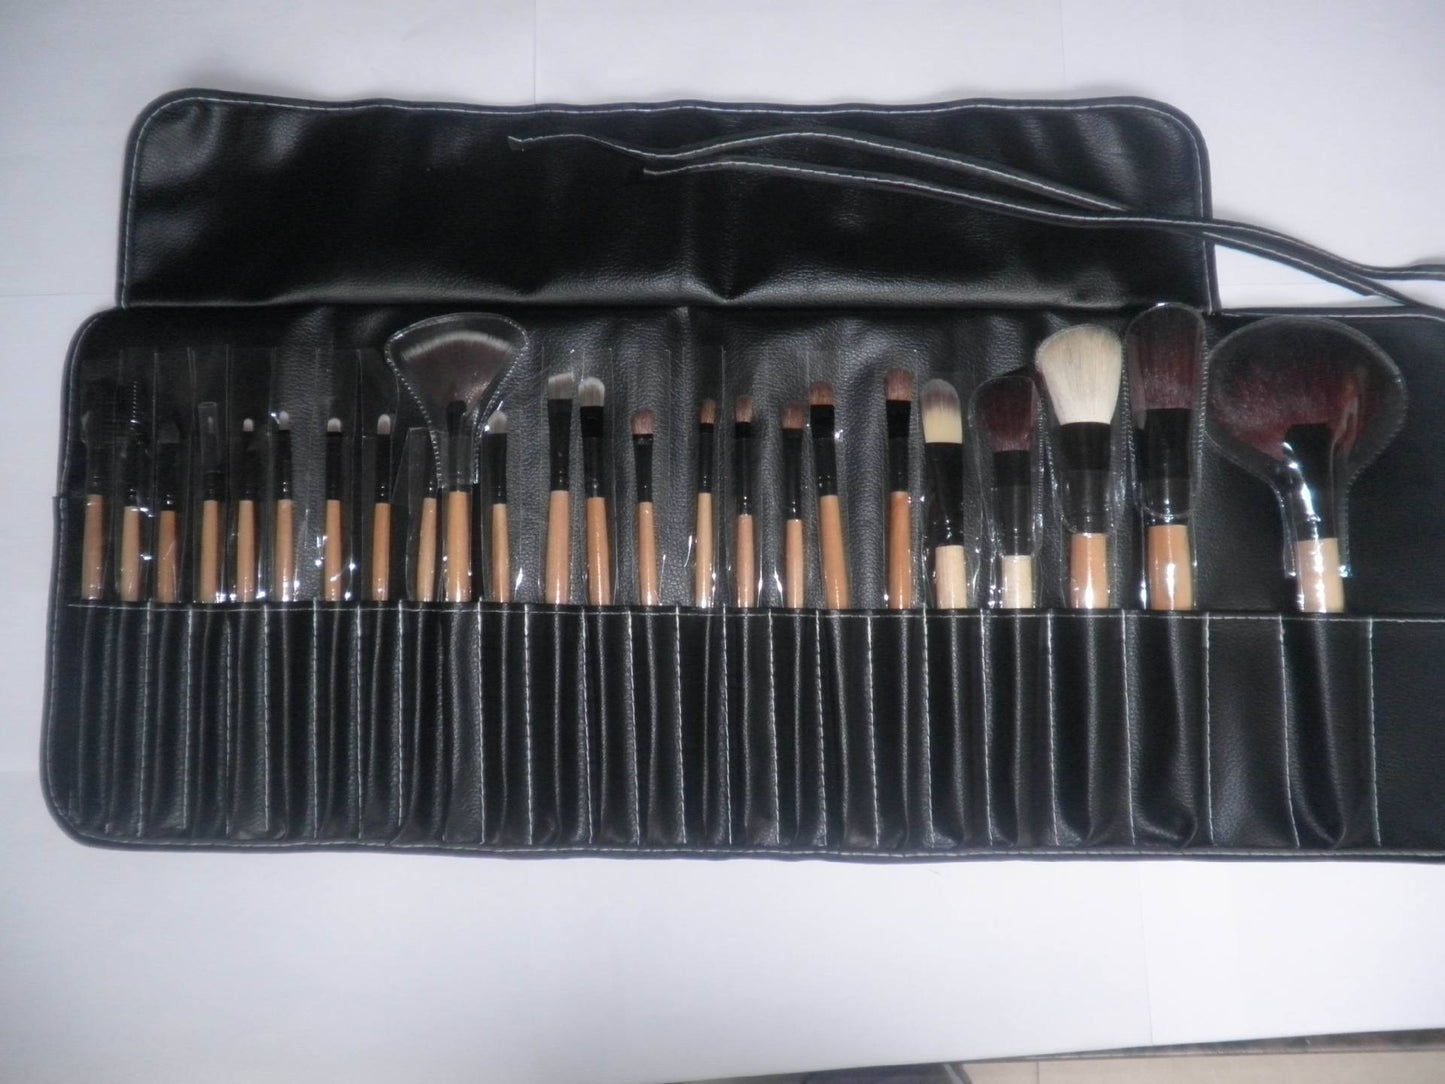 24 Makeup Brushes No Logo High Quality Makeup Brush Set Pink Black Wood Color